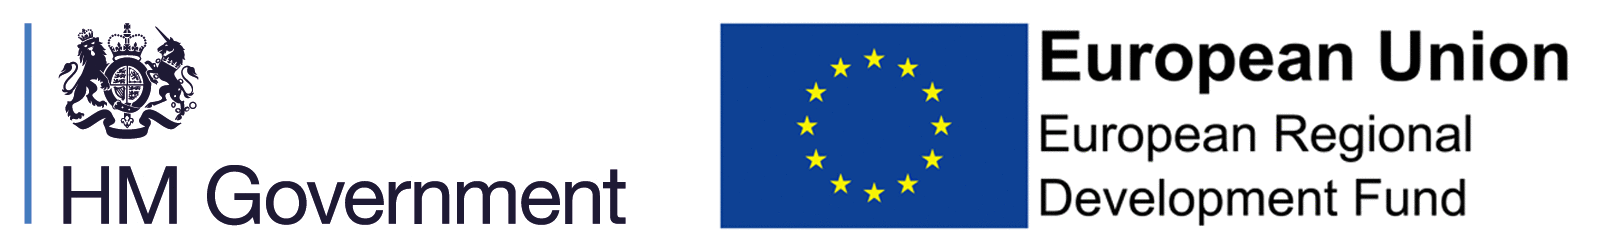 HM Government and European Regional Development Fund